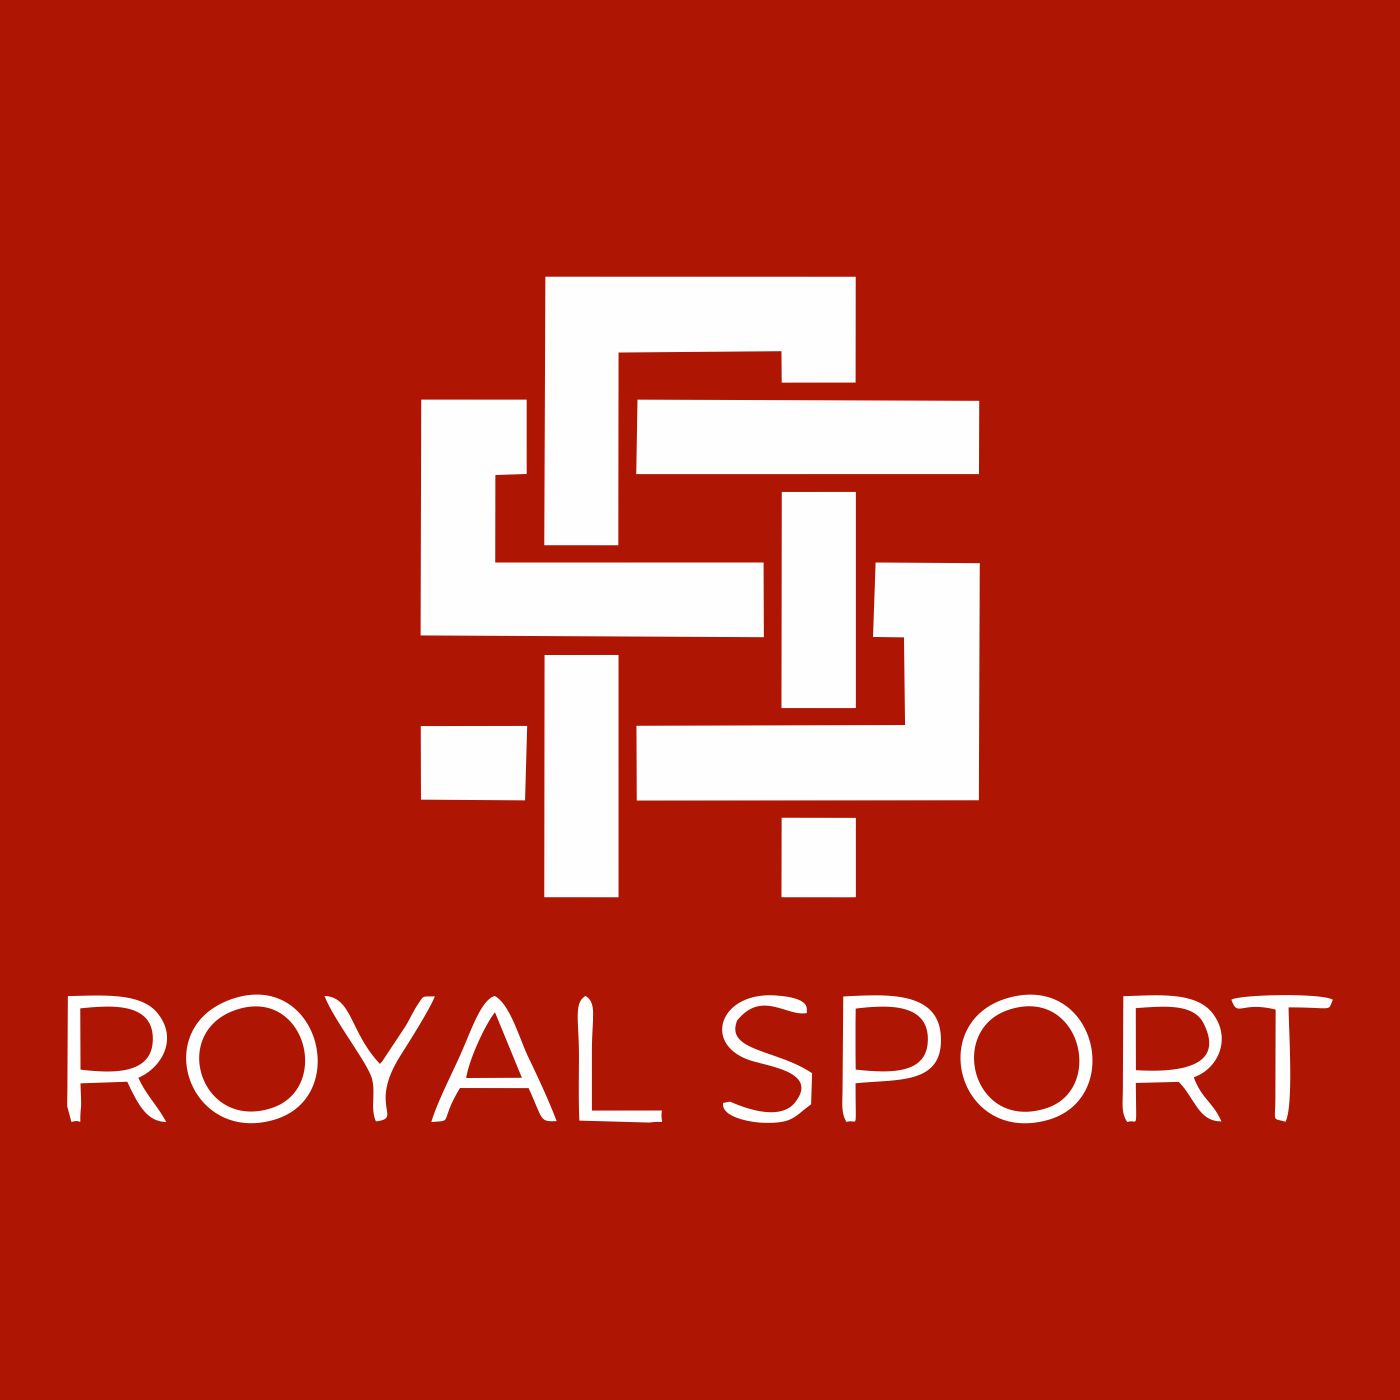 Royal Sport